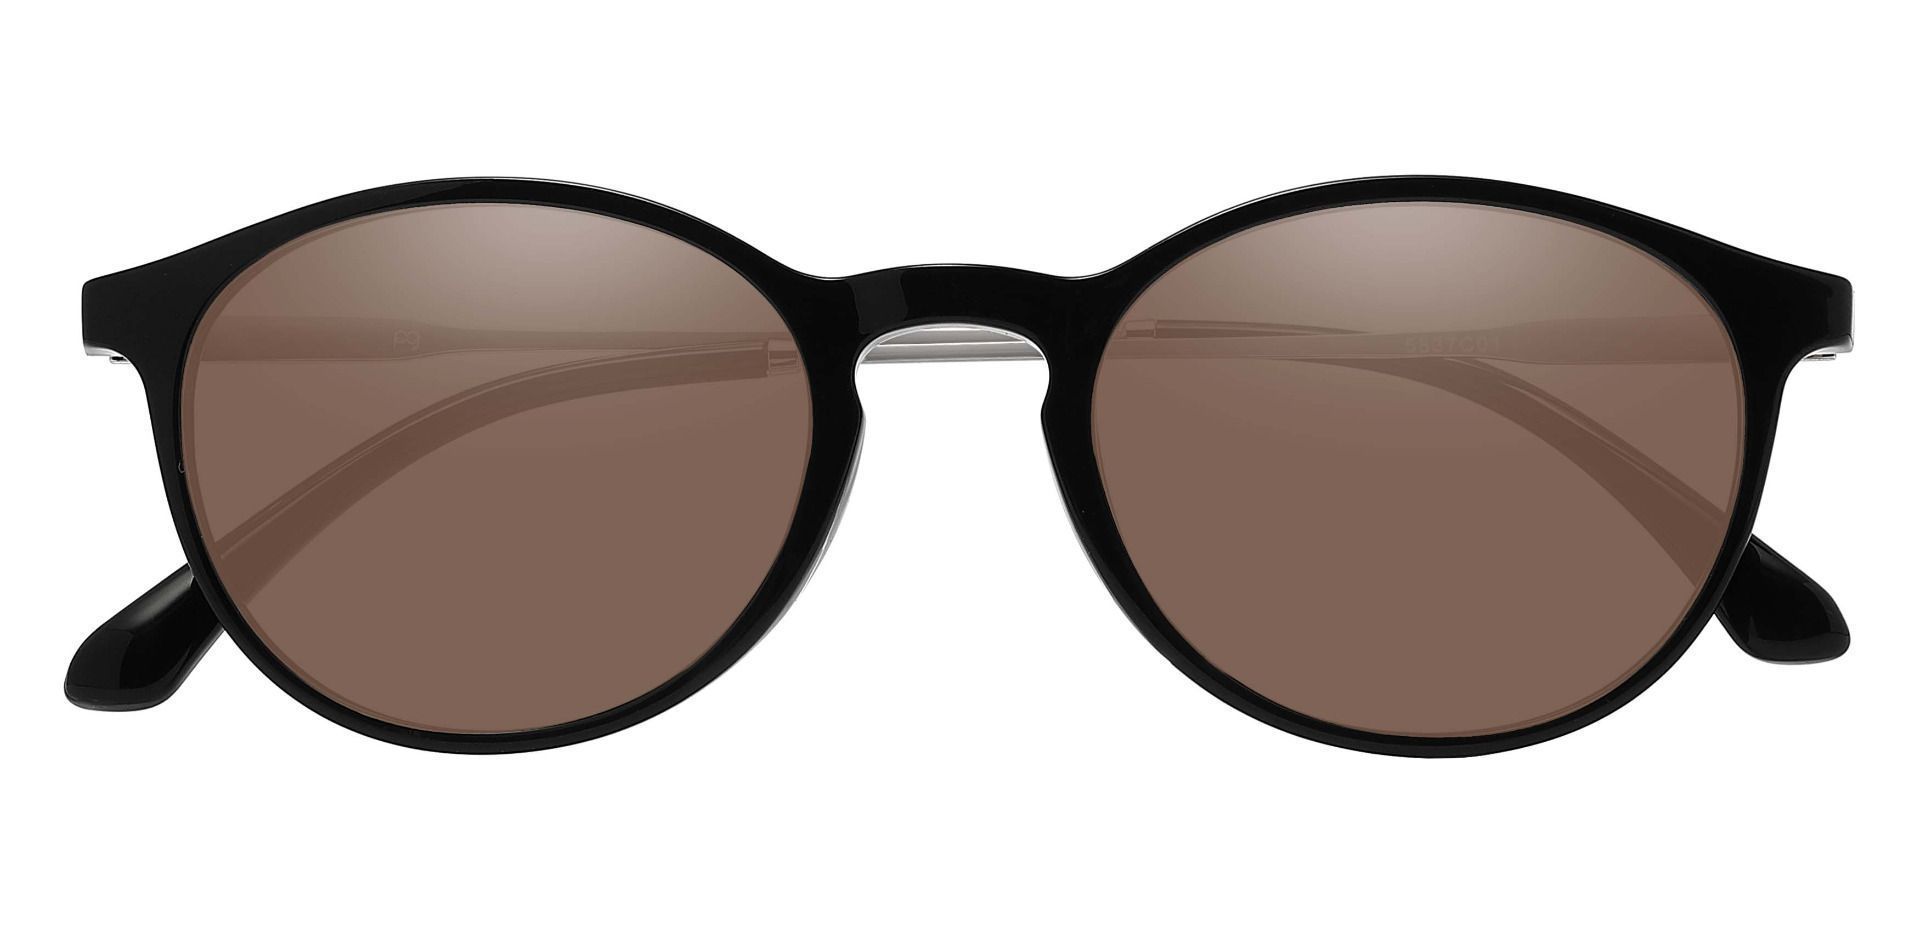 Felton Oval Prescription Sunglasses - Black Frame With Brown Lenses